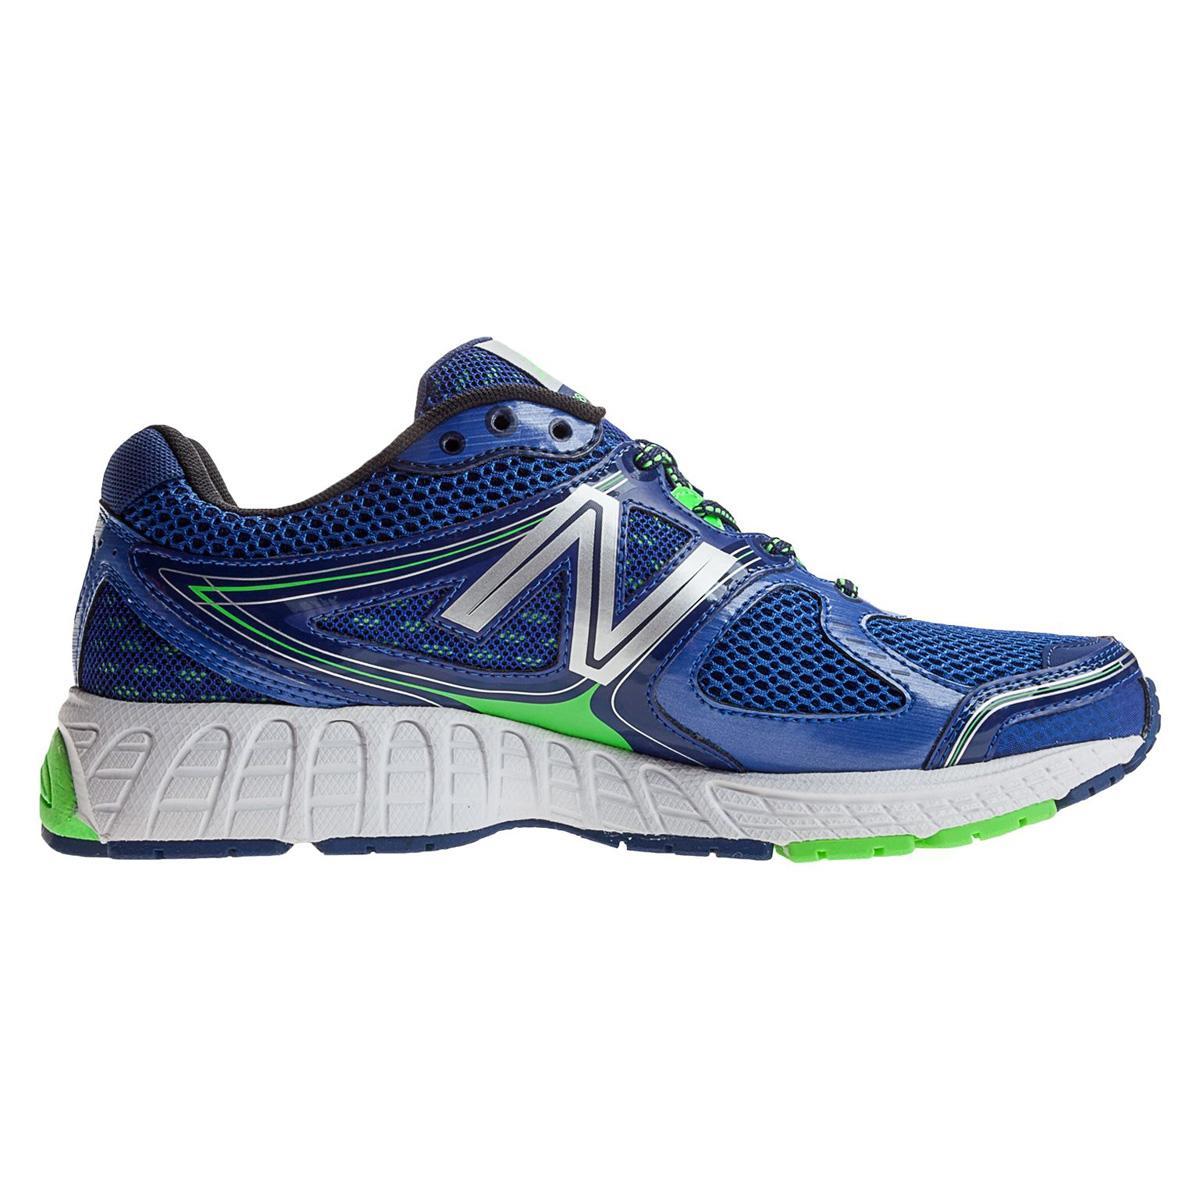 New Balance M680v2 Mens (D) Running Shoes - Blue/Neon-Green/White ...